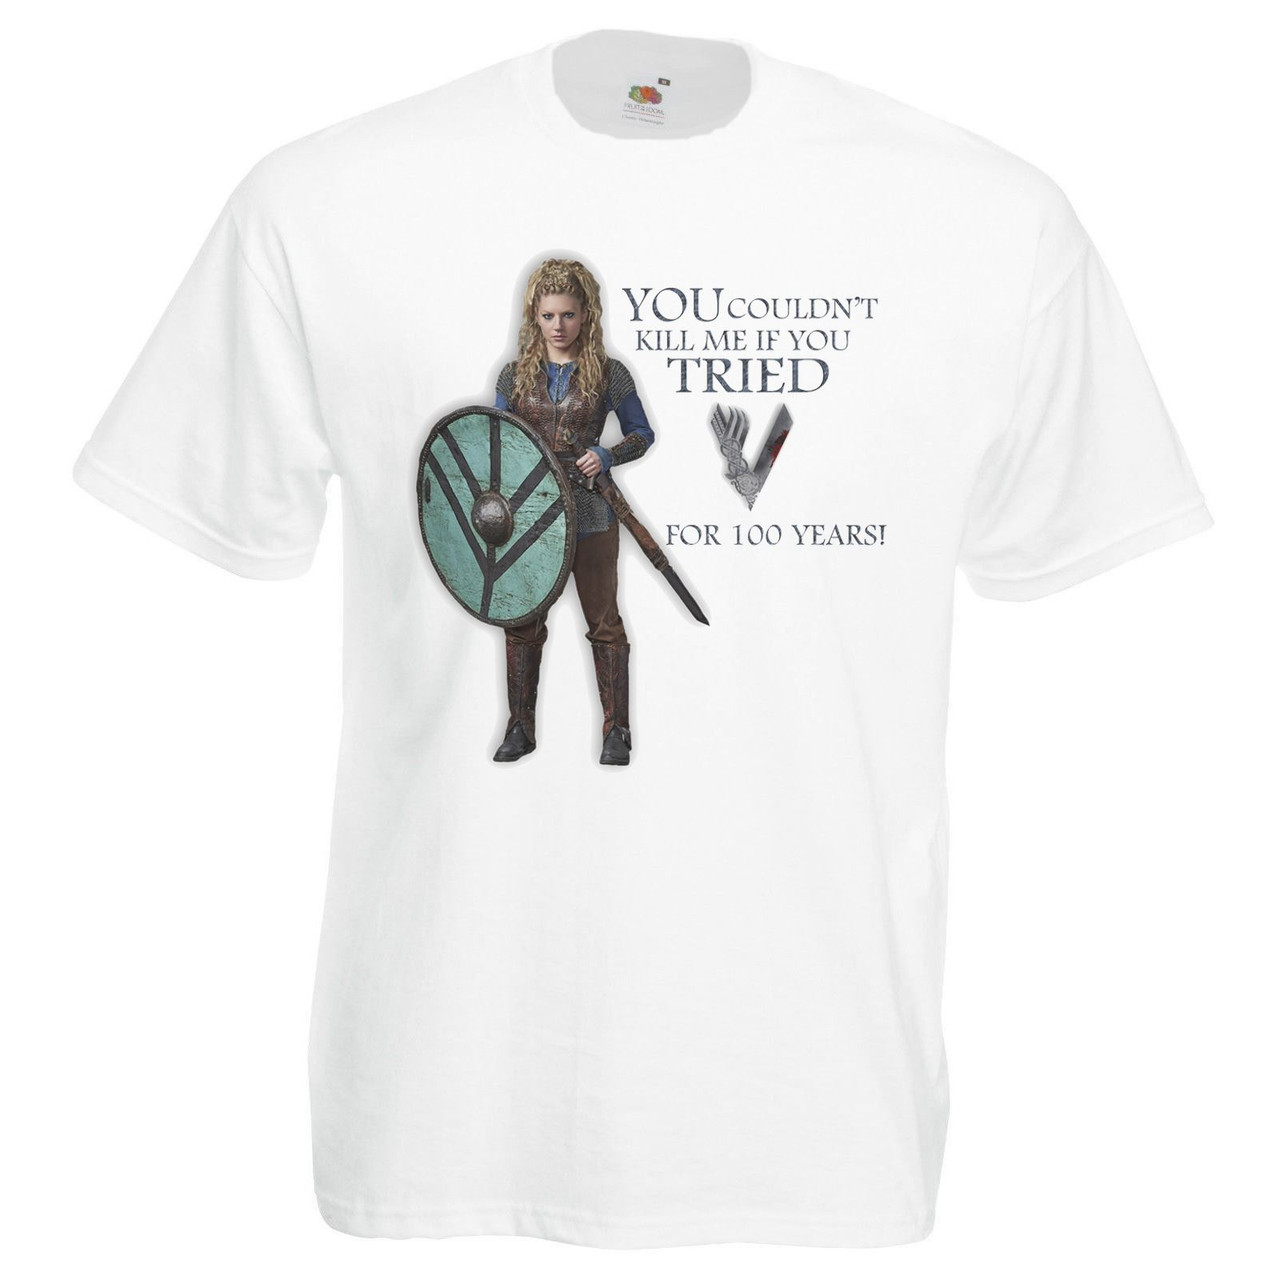 vikings series t shirt